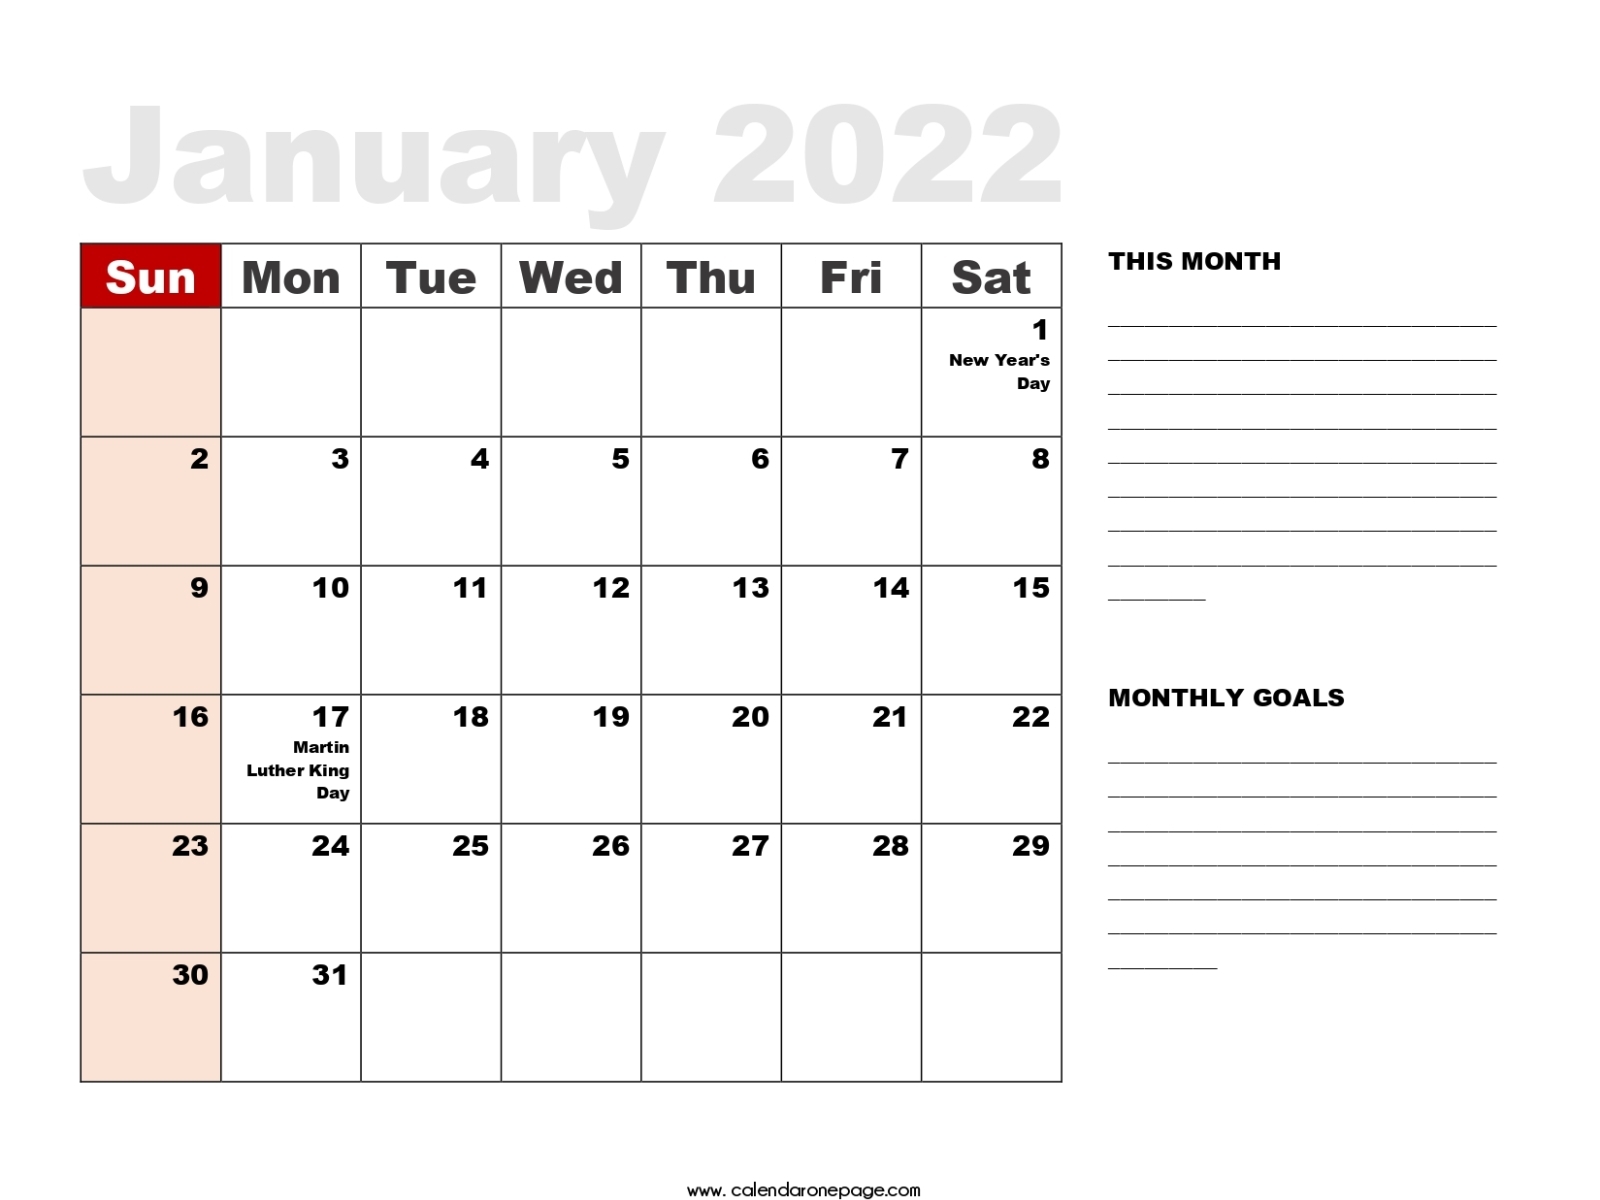 Free Printable January 2022 Calendar by calendar onepage on Dribbble